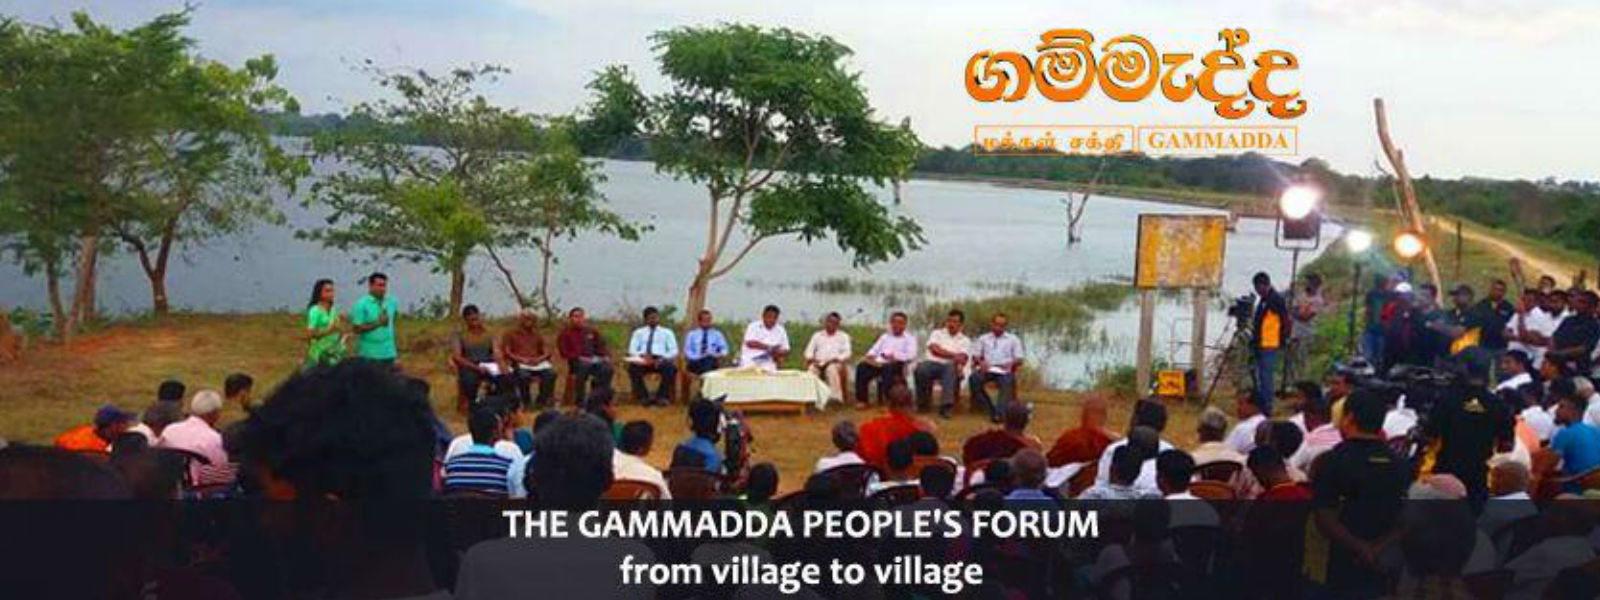 Gammadda Village forum tours island for 20th day 